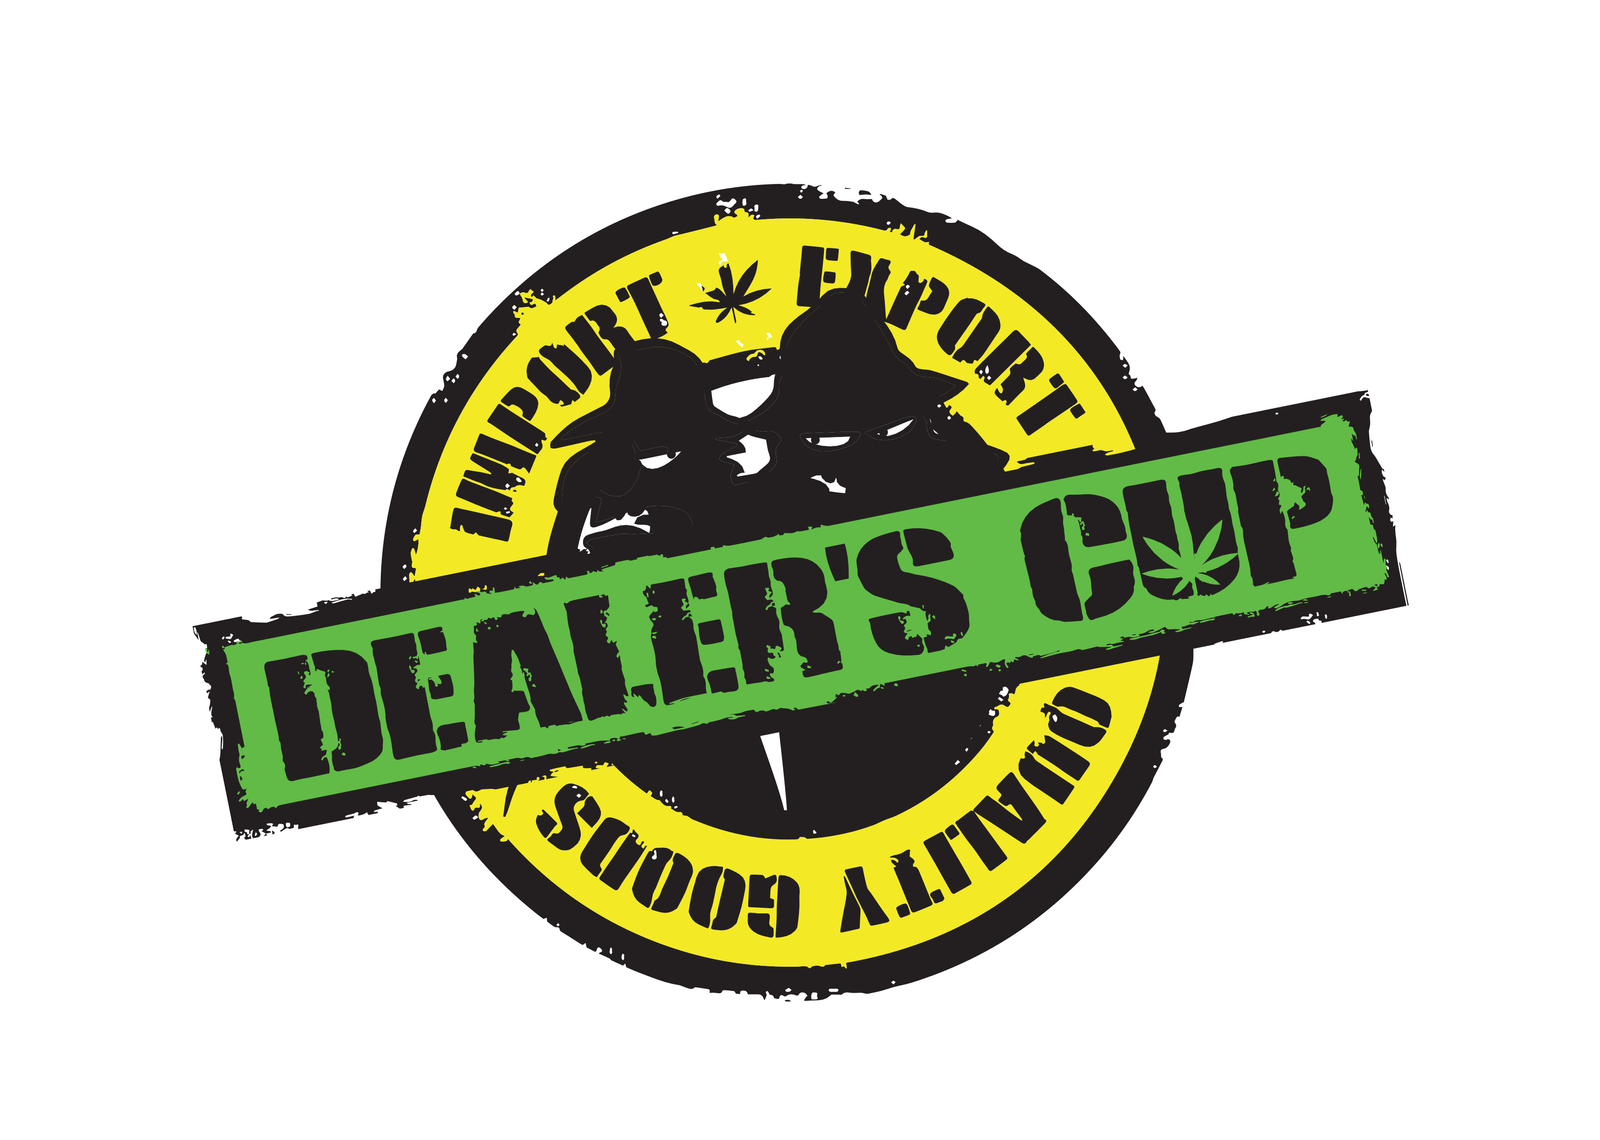 Dealer's Cup Logo